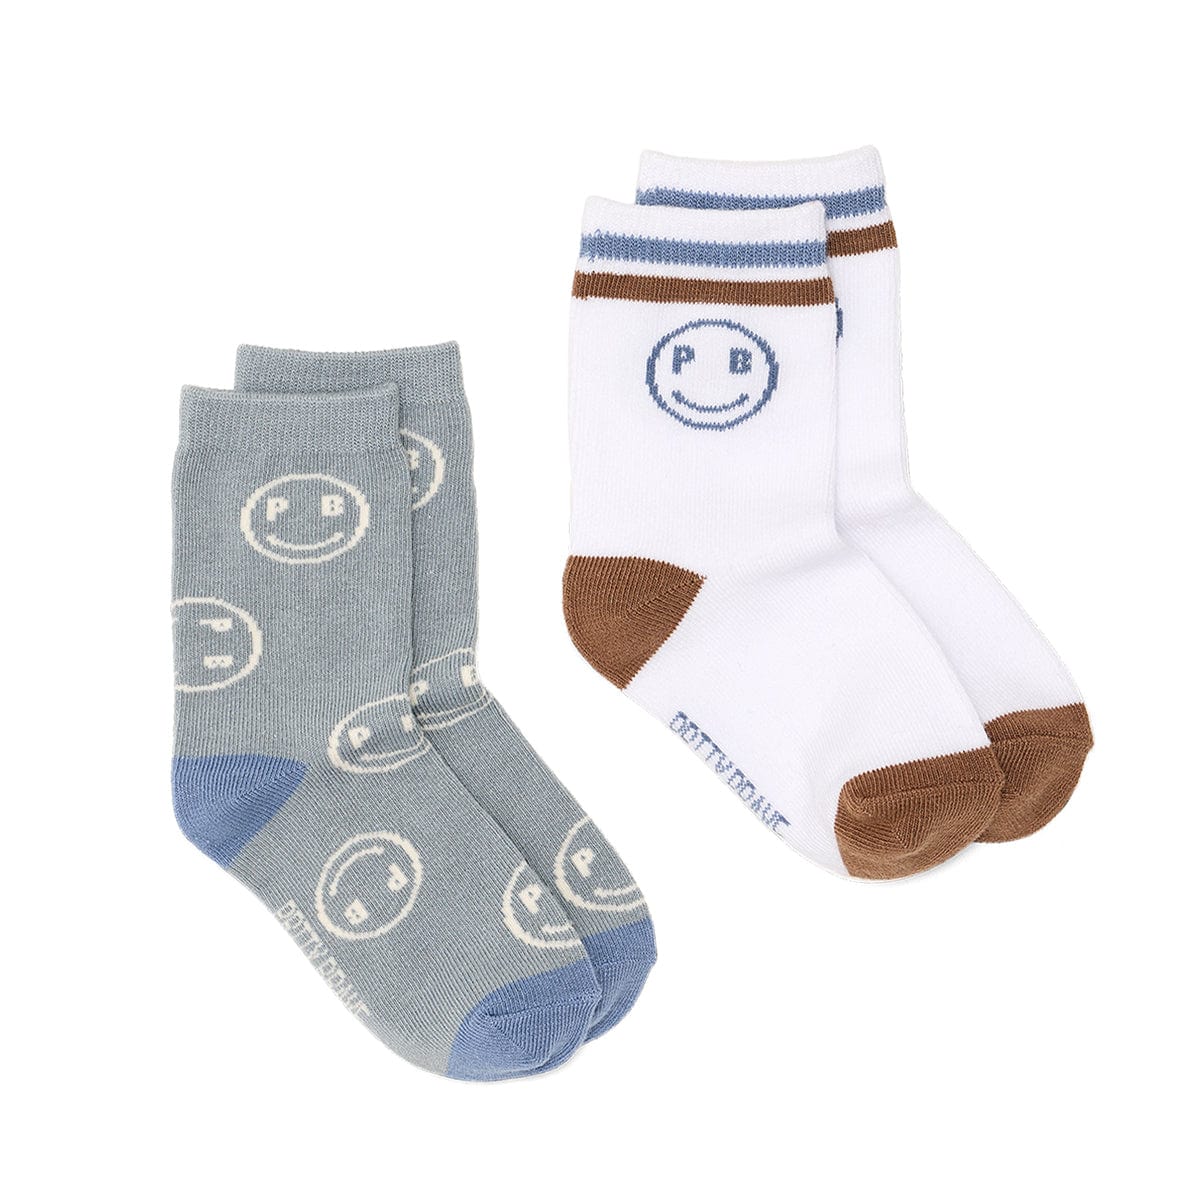 Pretty Brave Accessory Socks 2-Pack Smiley Socks - Sage/White